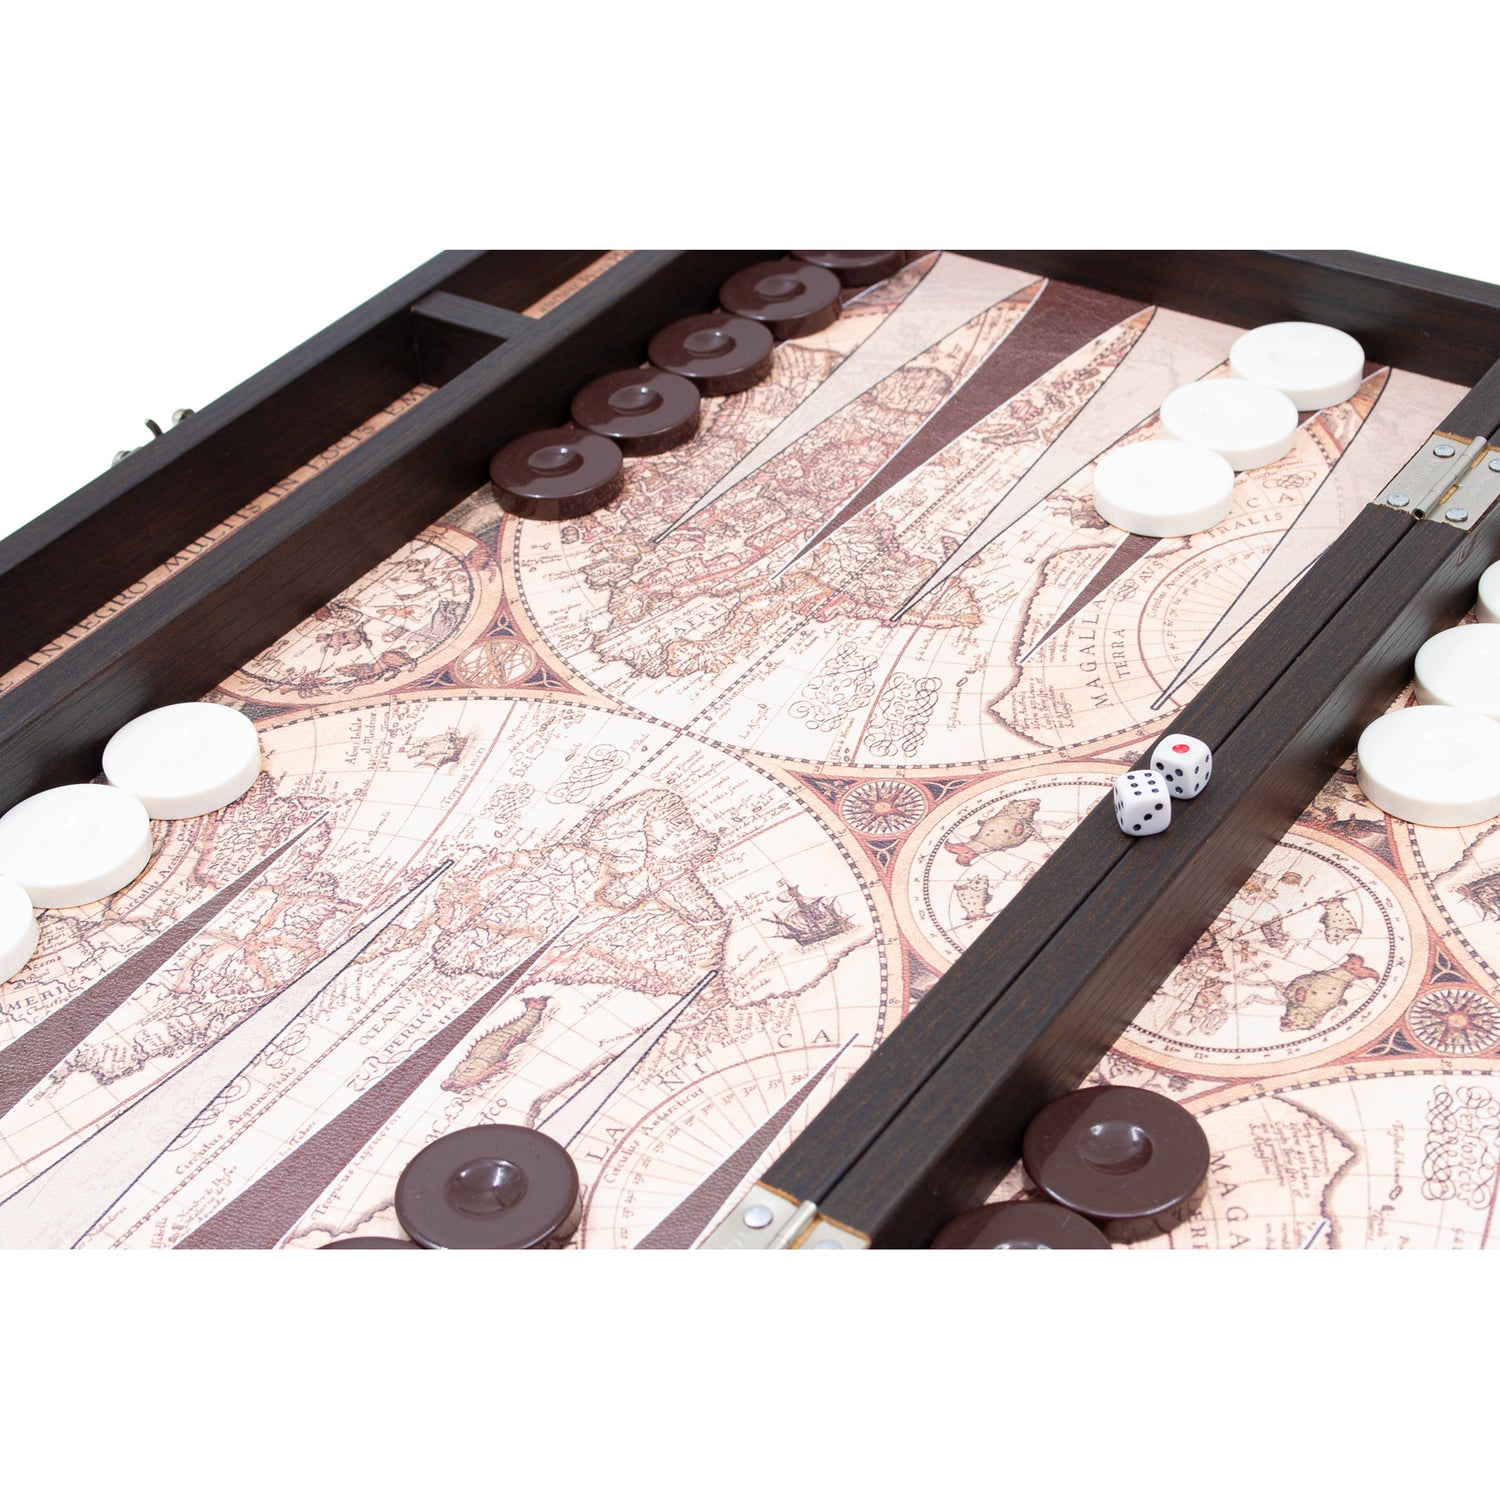 Backgammon Set World Map Design: Unique Handcrafted - Ketohandcraft